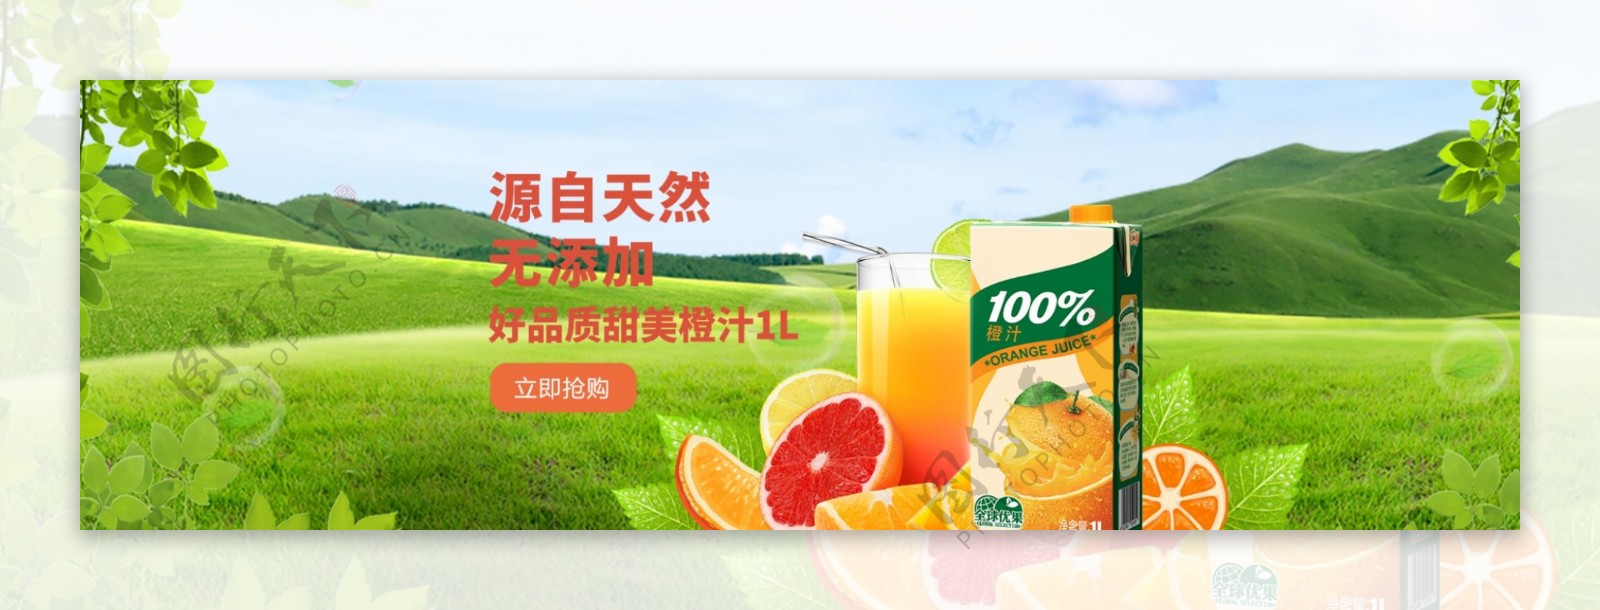 网页果汁宣传banner